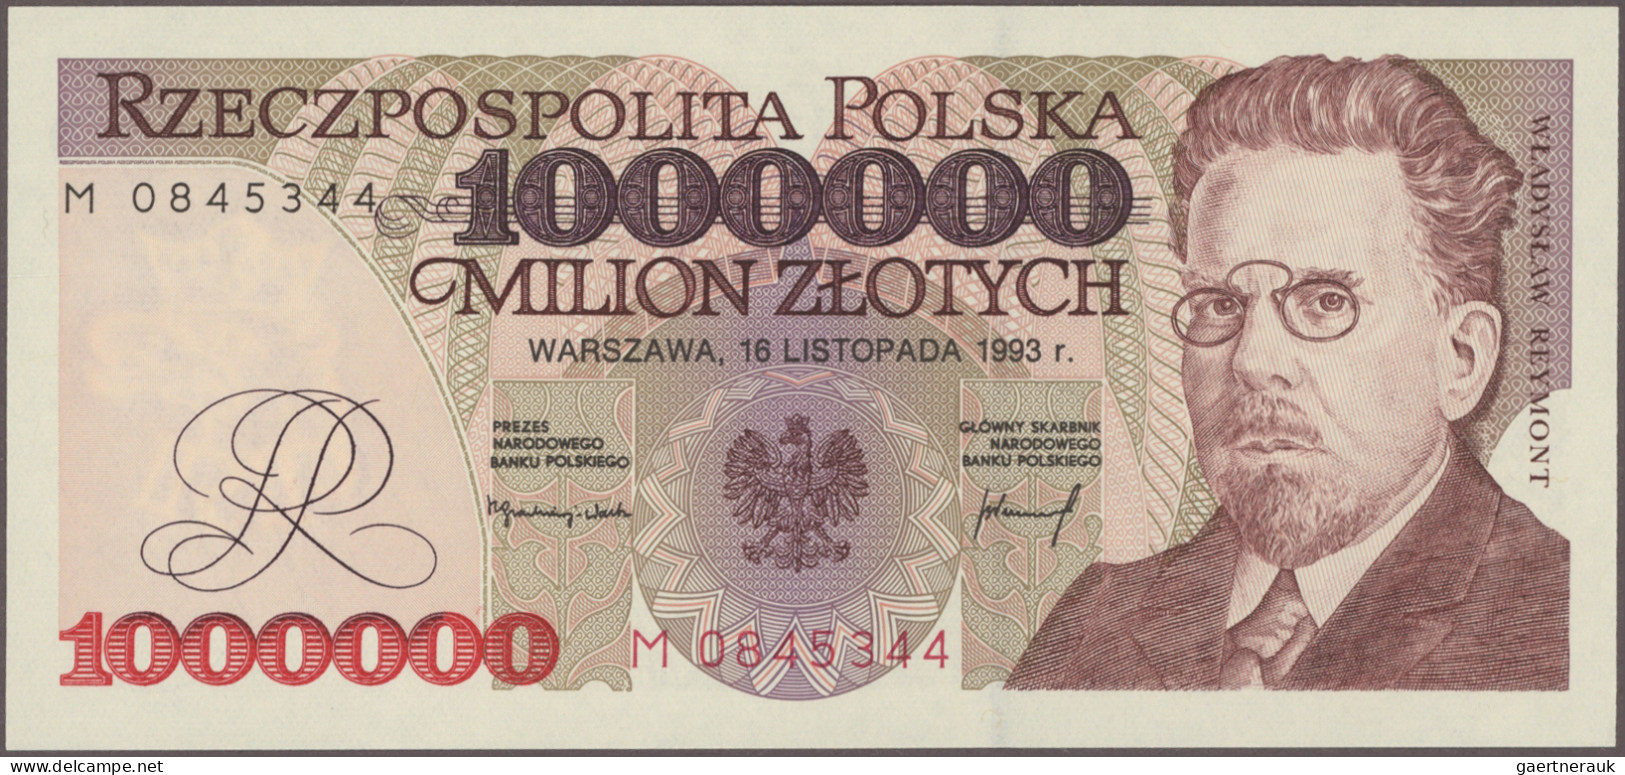 Poland - Bank notes: Narodowy Bank Polski, huge lot with 40 banknotes, series 19